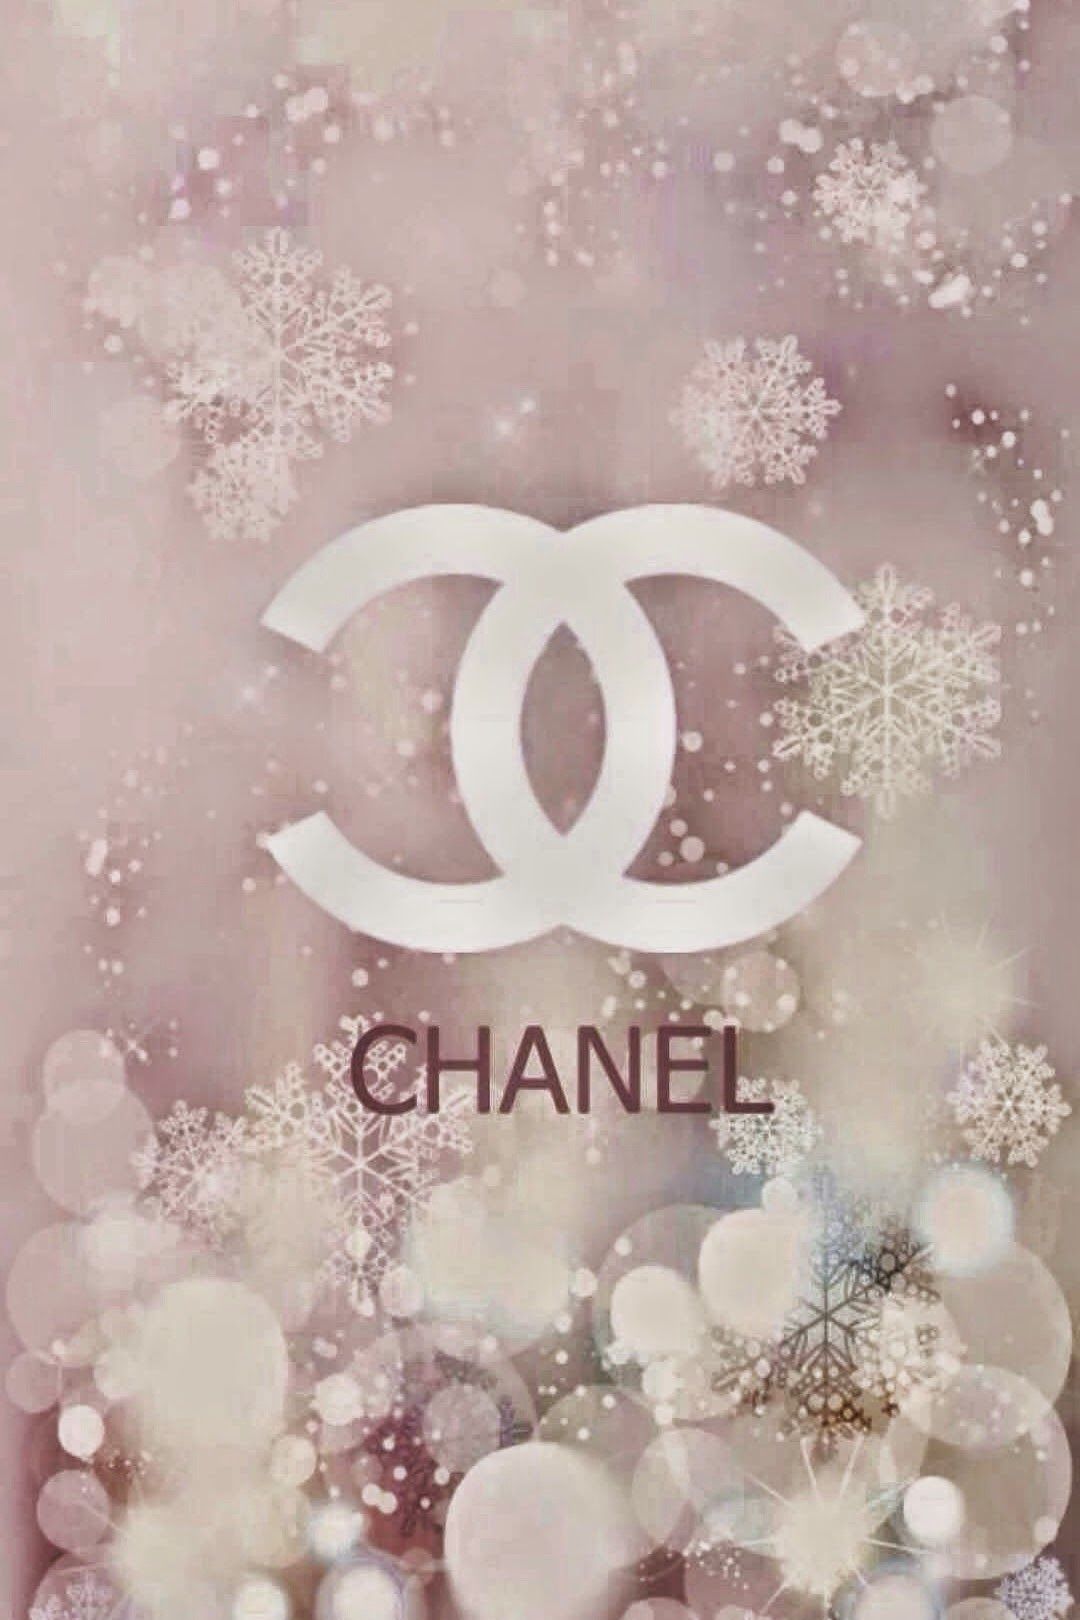 Chanel wallpaper, Iphone wallpaper, Wallpaper backgrounds - Chanel